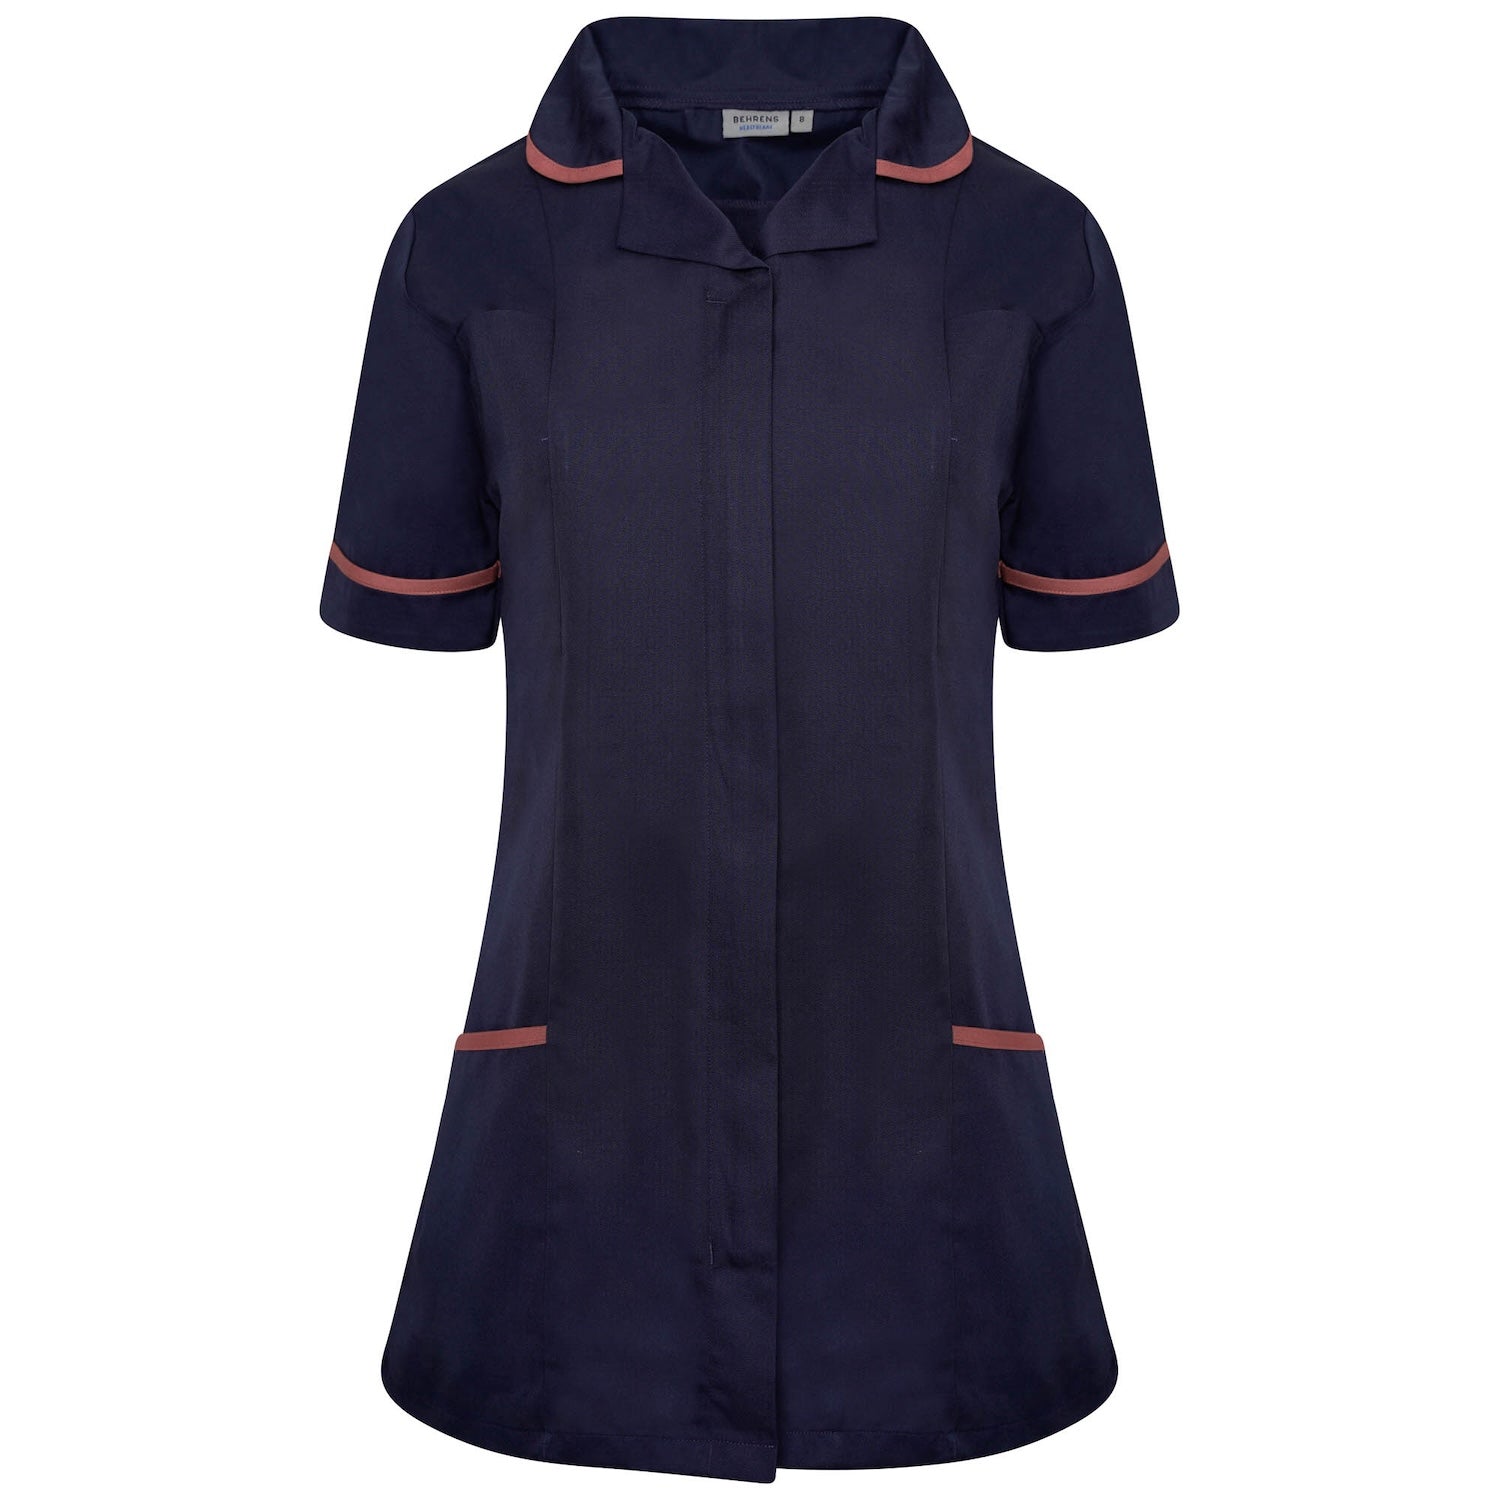 Ladies Healthcare Tunic | Round Collar | Navy/Red Trim